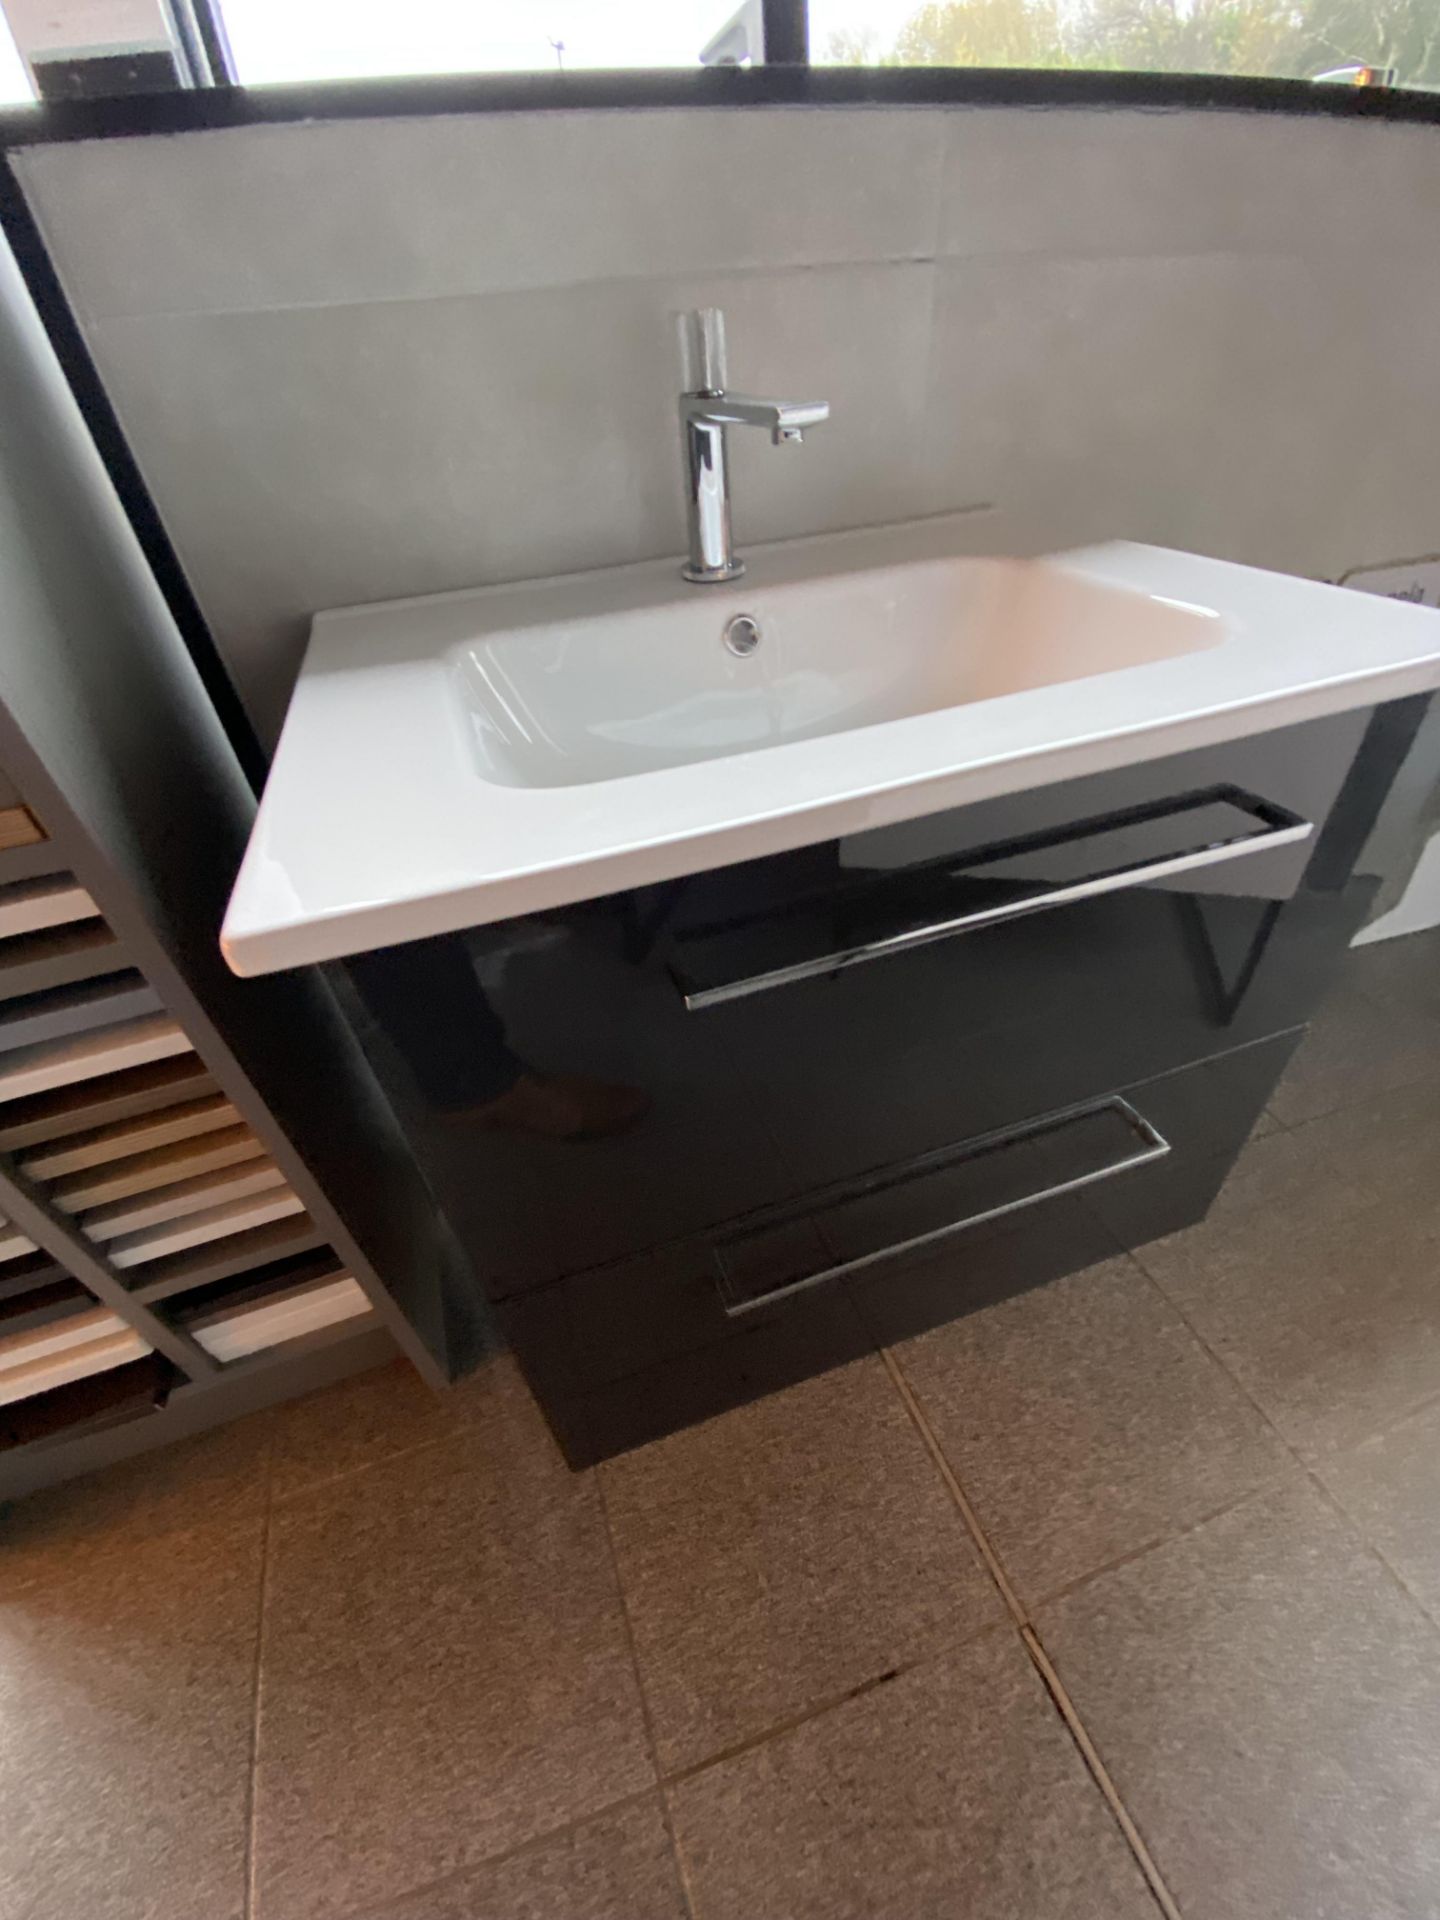 2 door bathroom sink pedestal unit (in black gloss)with sink and mixer tap